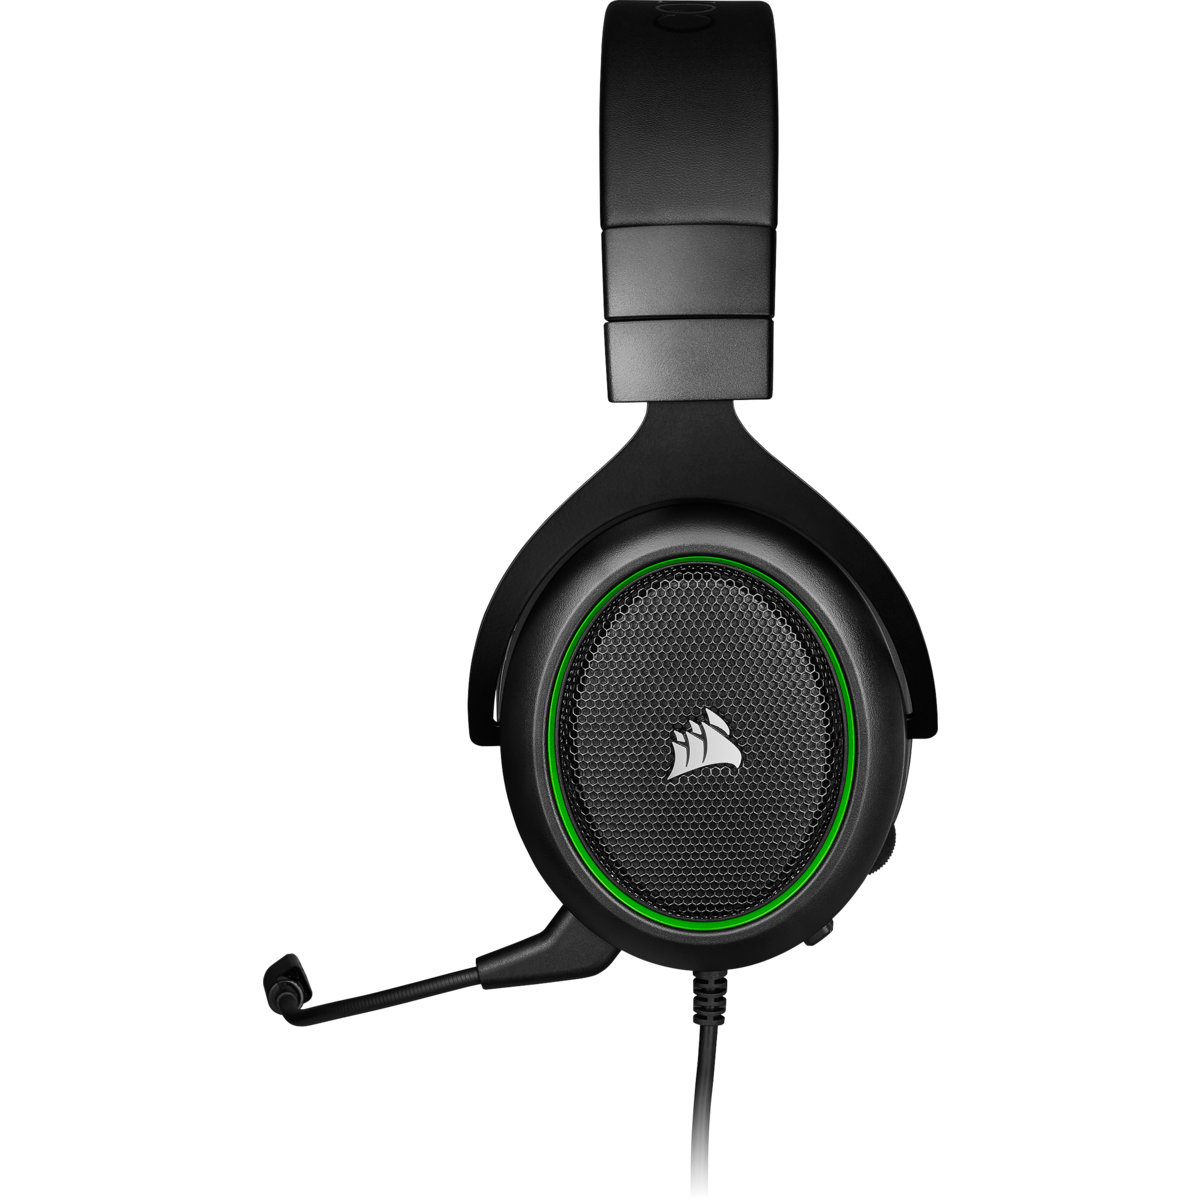 HS50 PRO STEREO Gaming Headset 電競遊戲耳機(綠色)